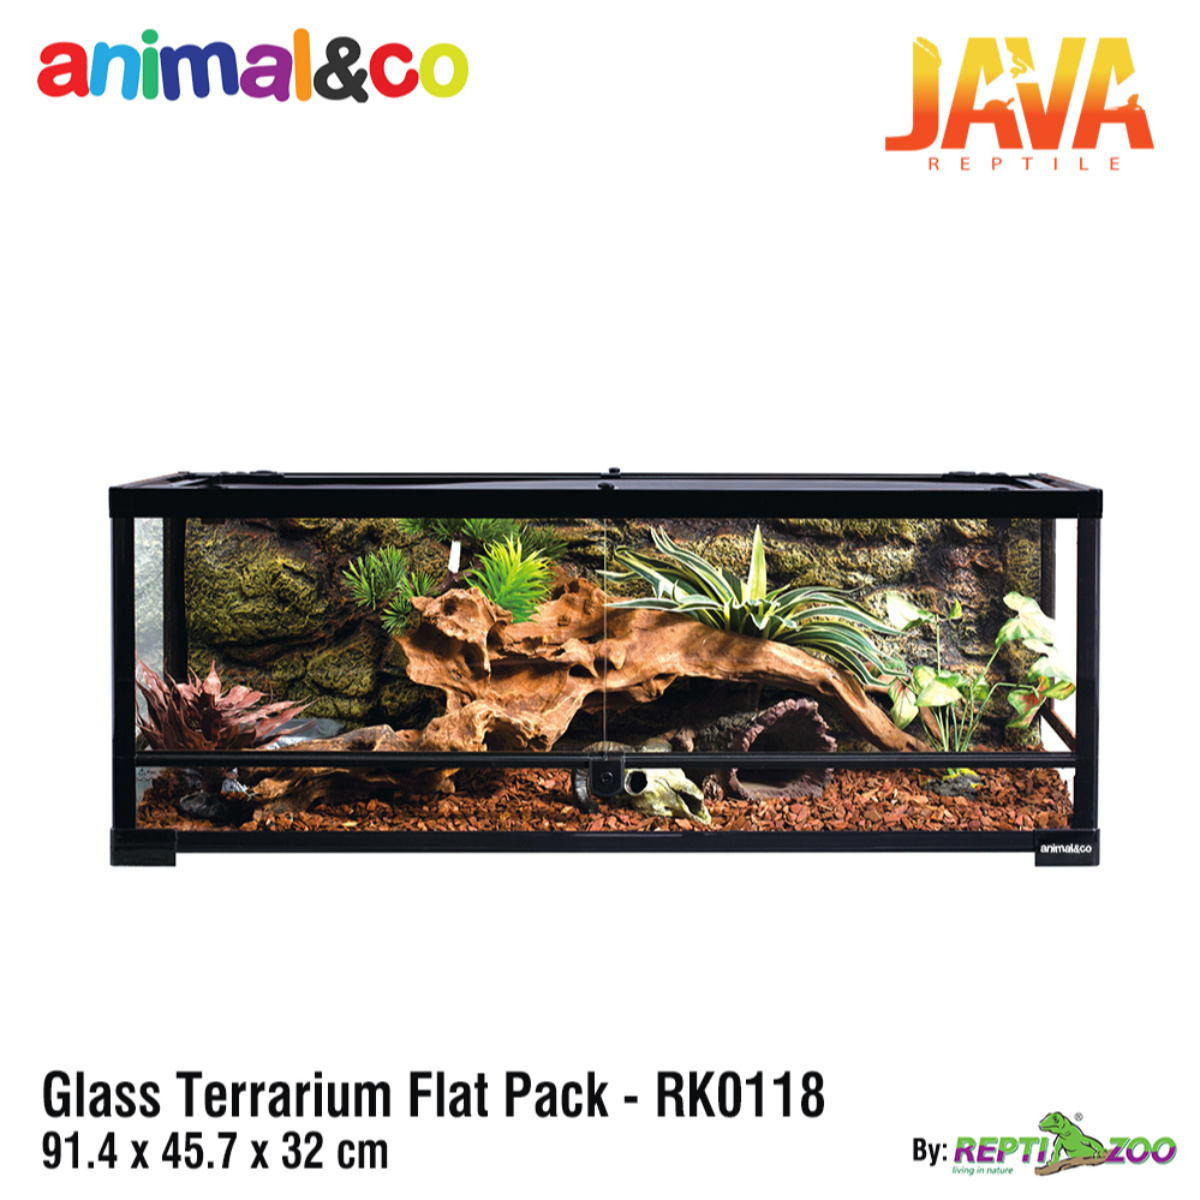 Animal&co Glass Terrarium 91x45x30cm by Reptizoo RK0118